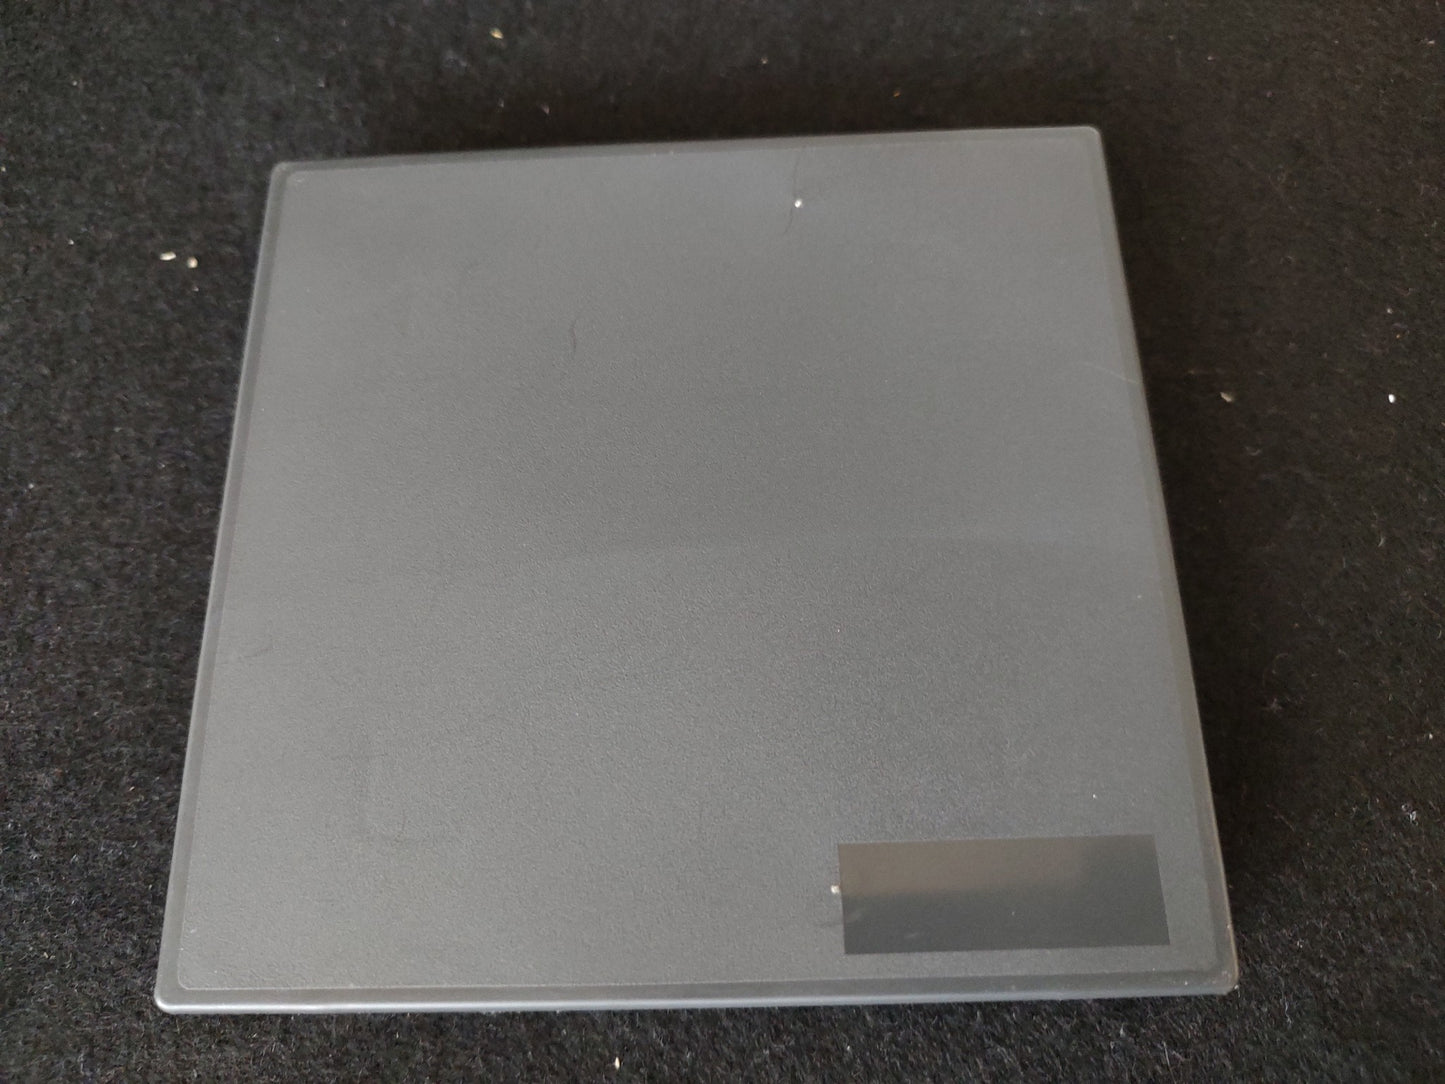 SORCERIAN Nihon Falcom MSX2 3.5FDD,Game disk, w/Manual, Box set,Working-f0915